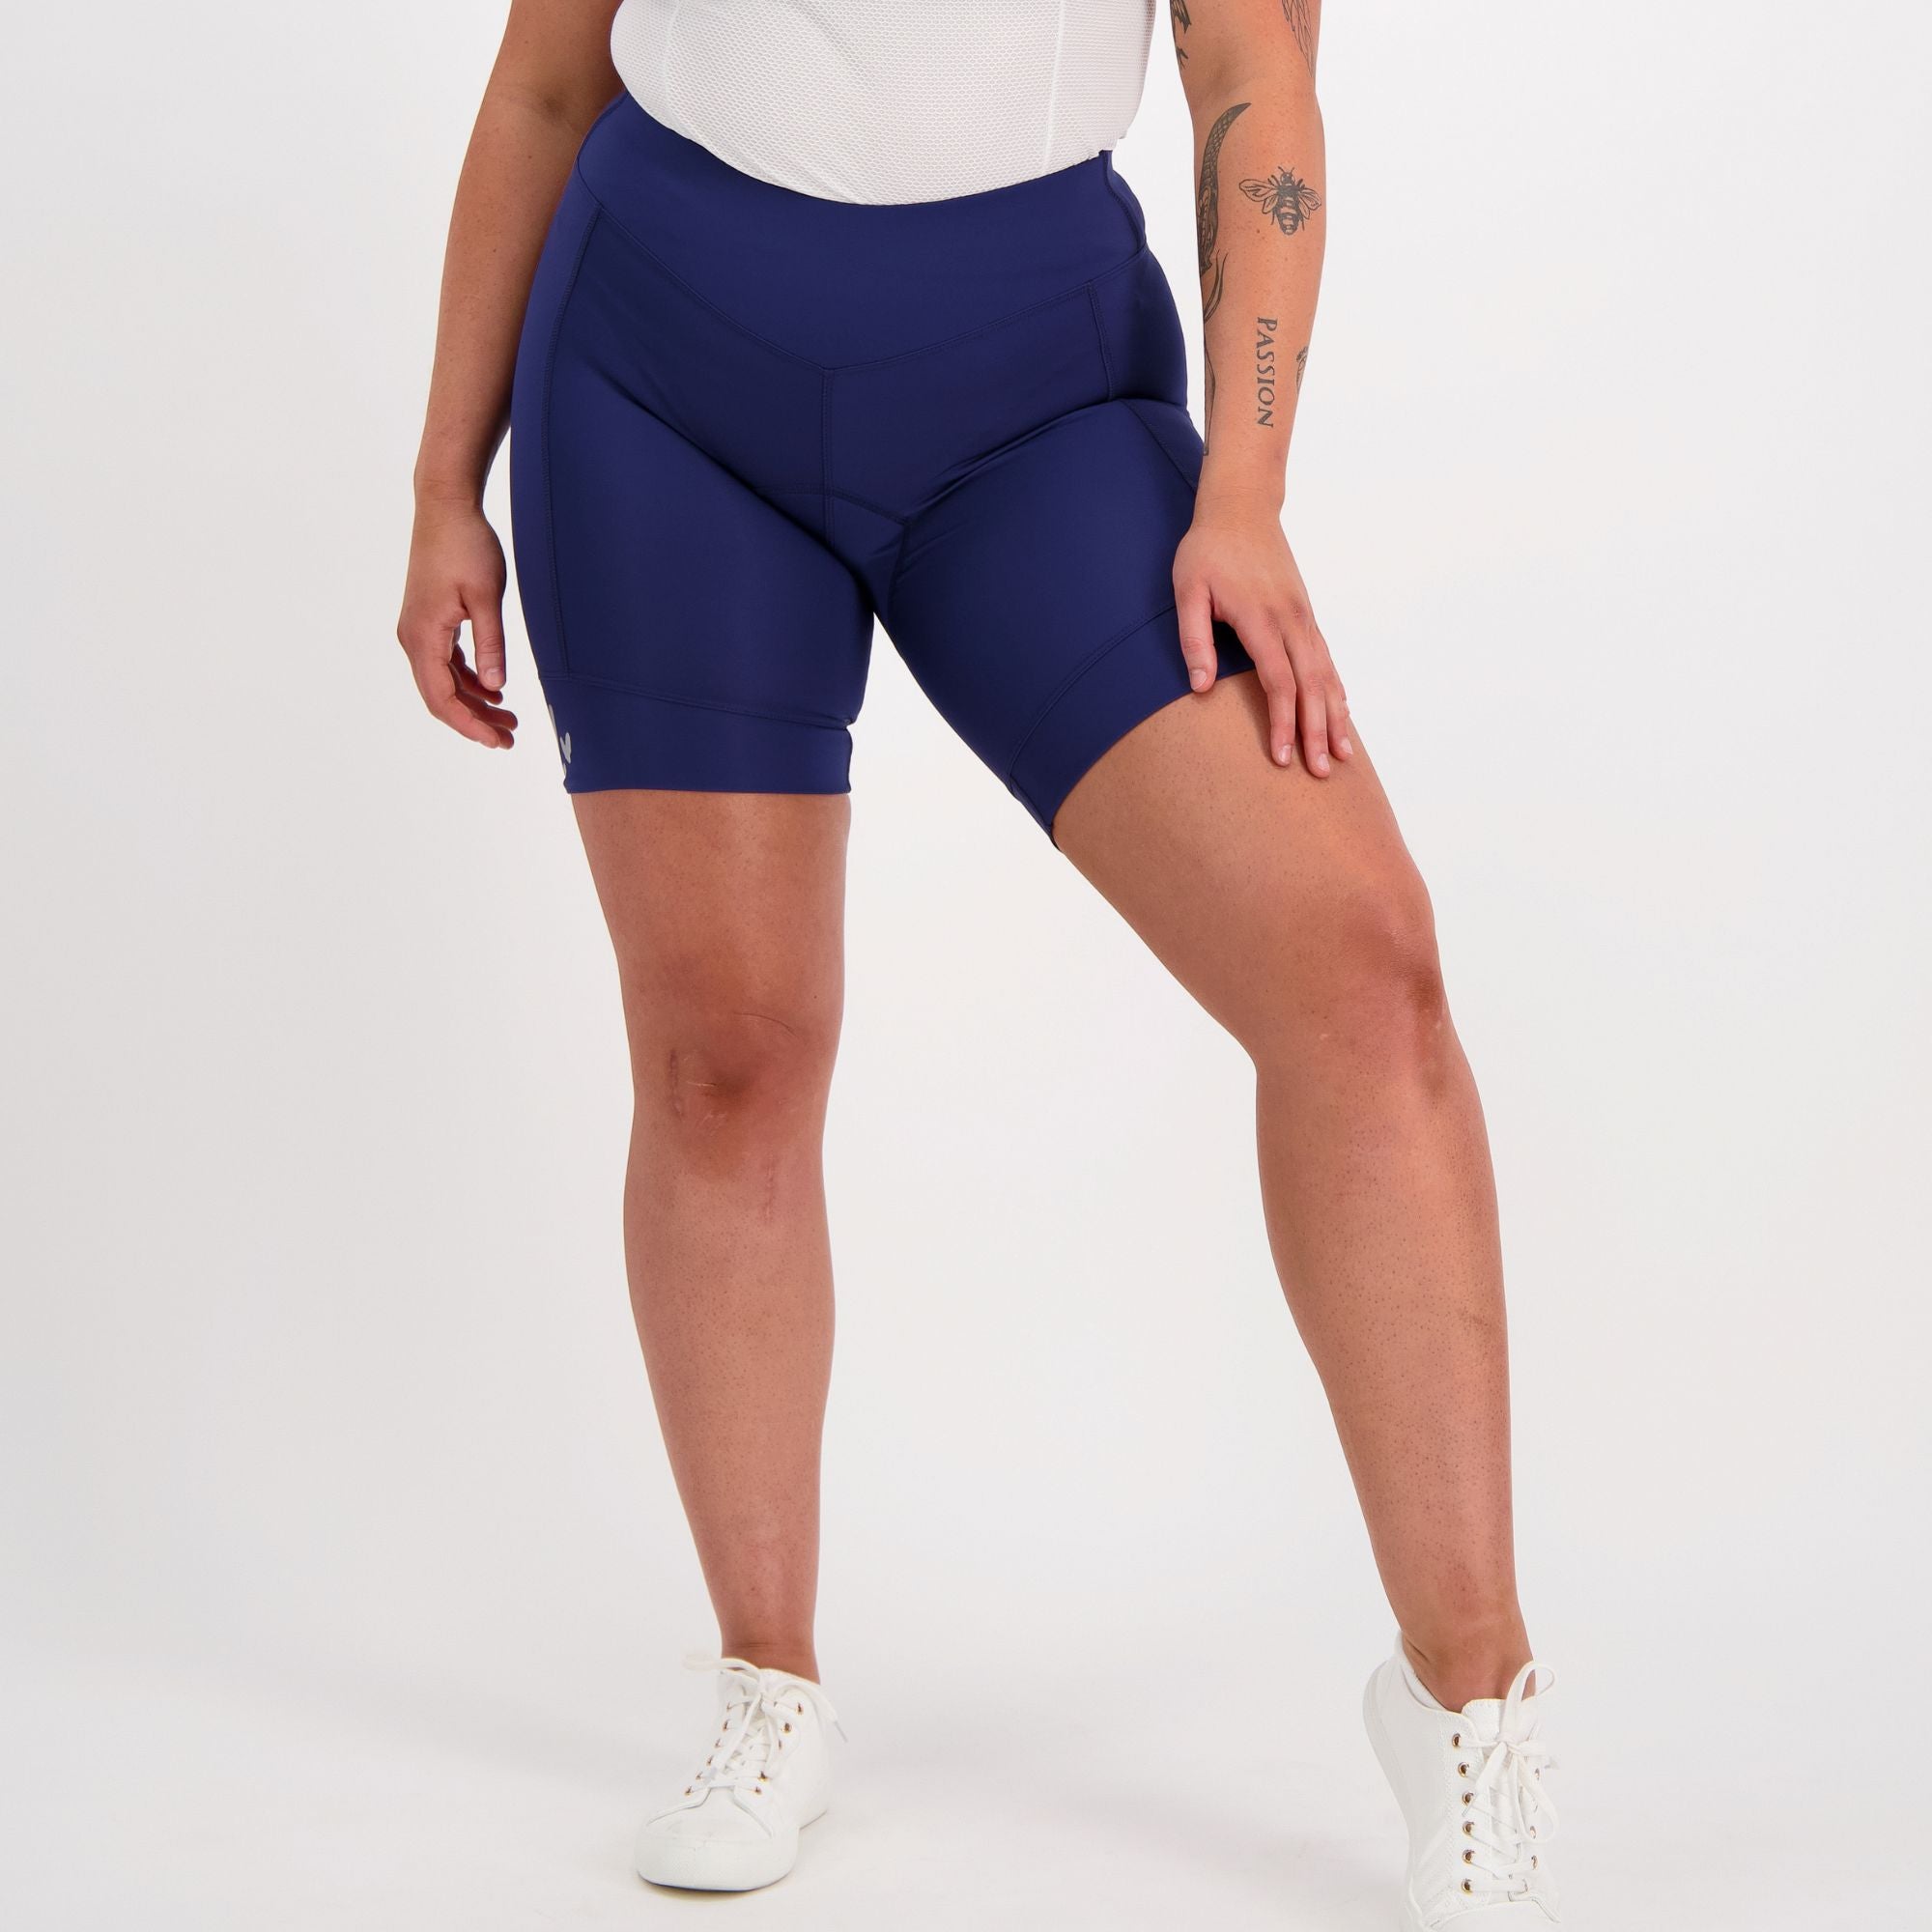 front view of female model wearing bay blue cruiser padded bike pants